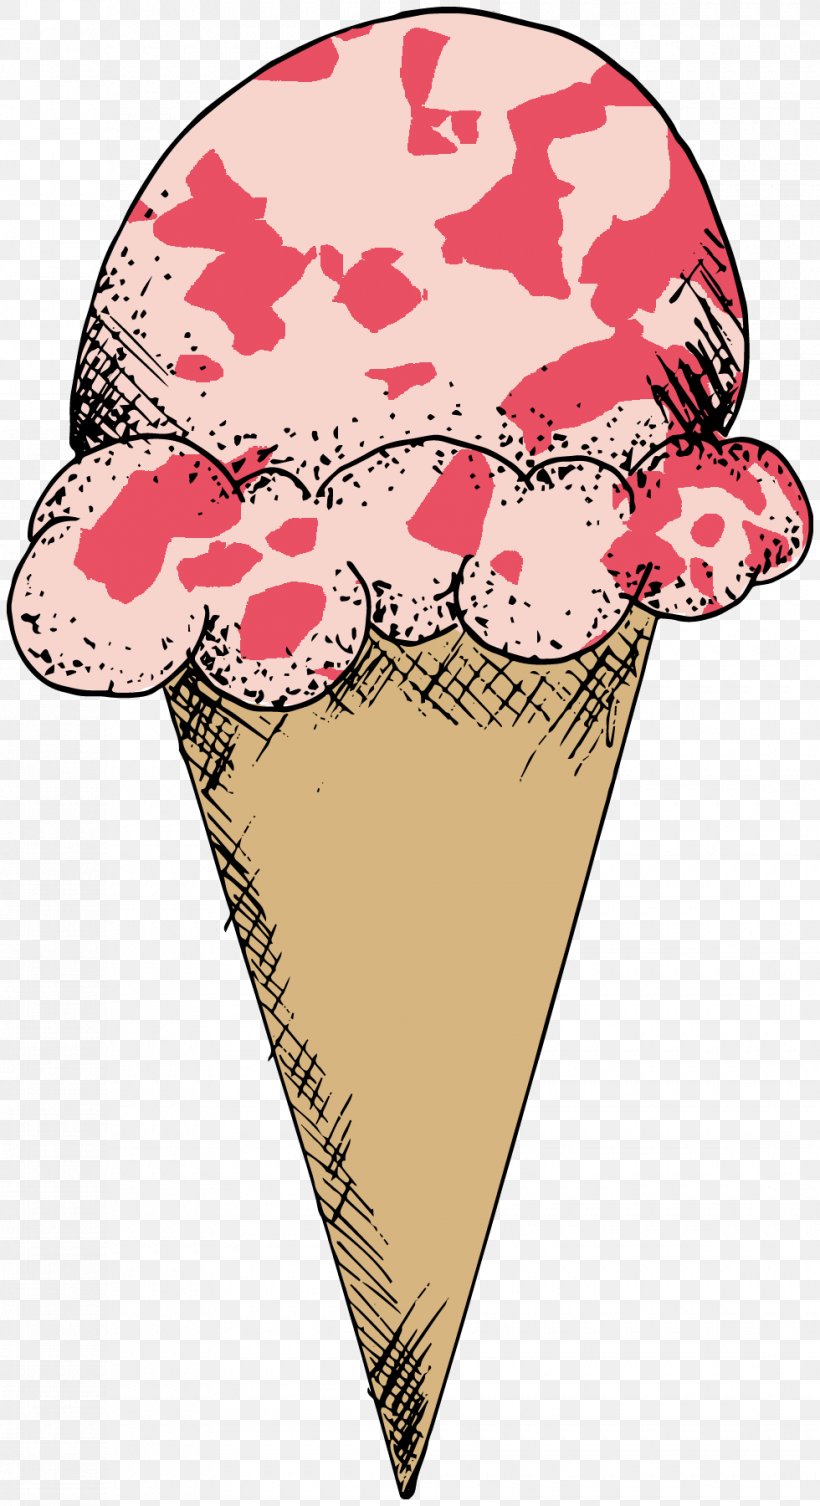 Ice Cream Cones Illustration Clip Art Heart, PNG, 980x1800px, Ice Cream Cones, Cone, Food, Heart, Ice Cream Cone Download Free